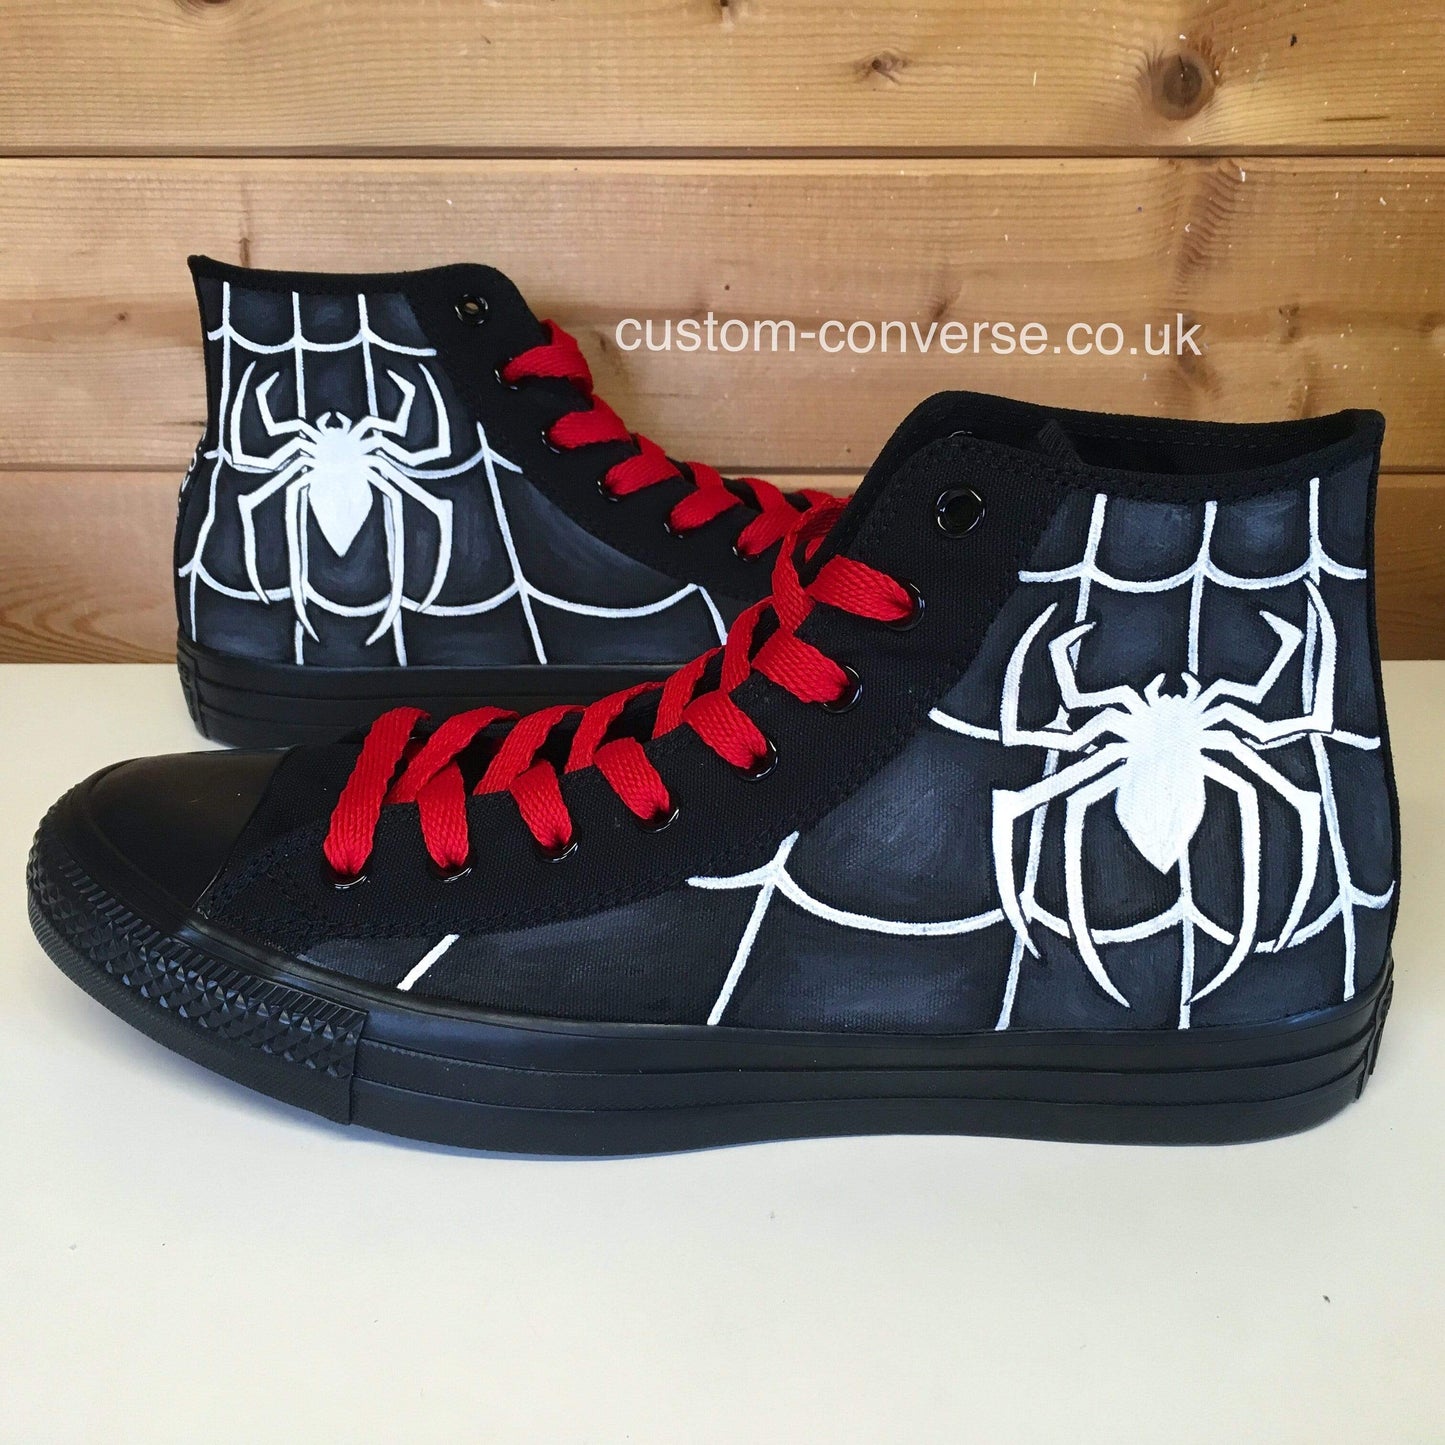 Spider-Man - Custom Converse Ltd.